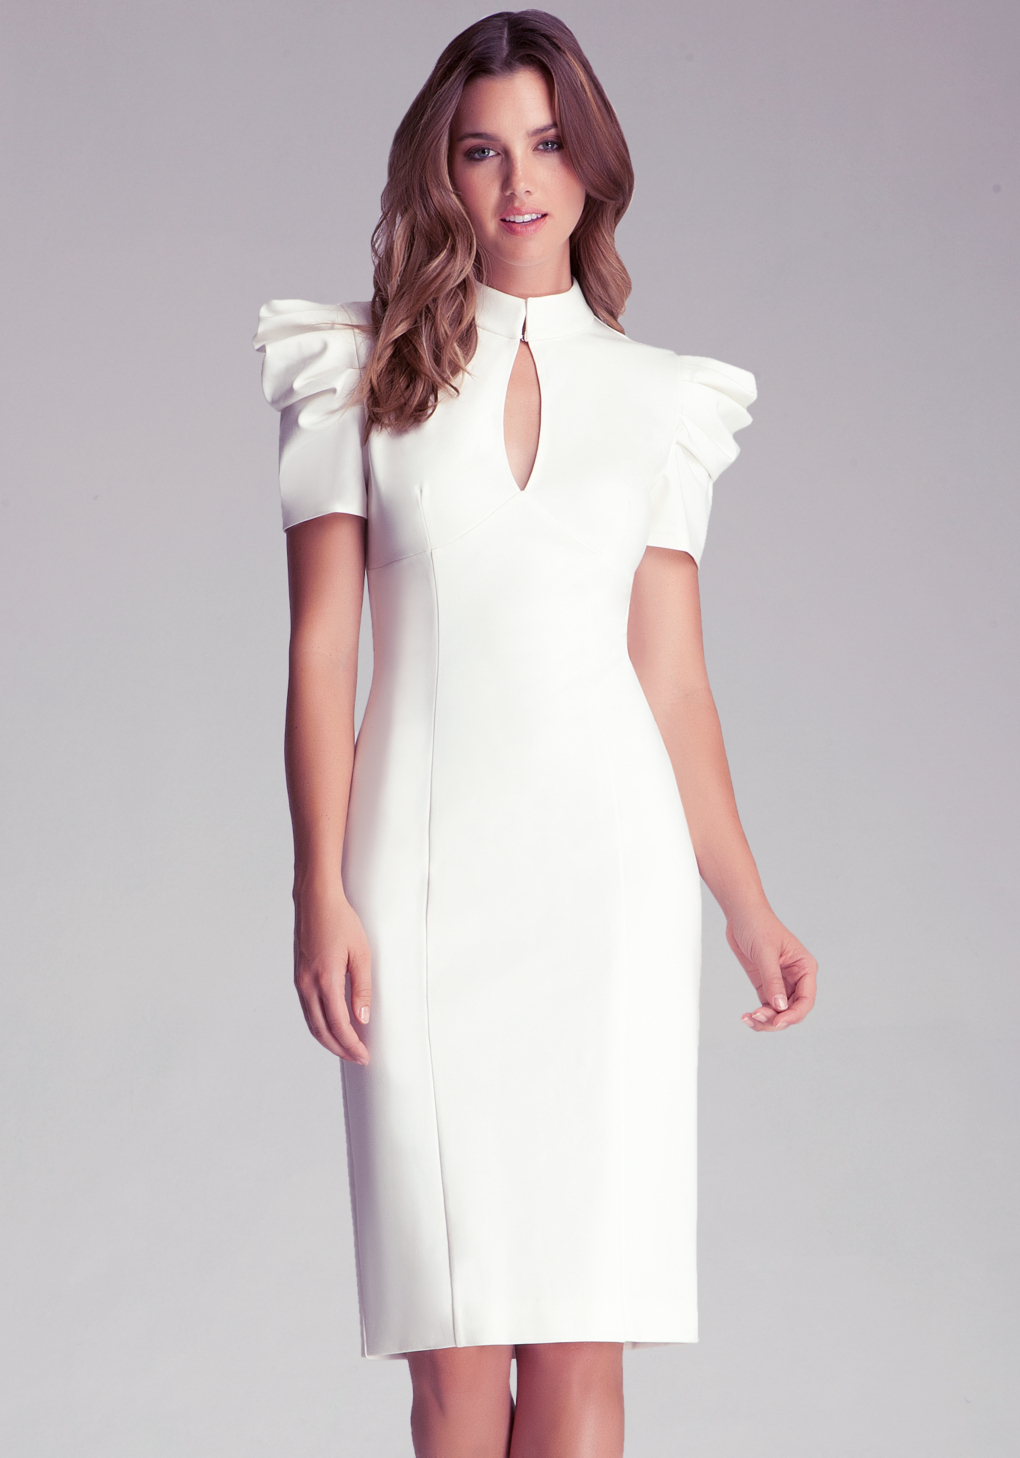 Lyst - Bebe Kirstie Pleated Midi Dress in White